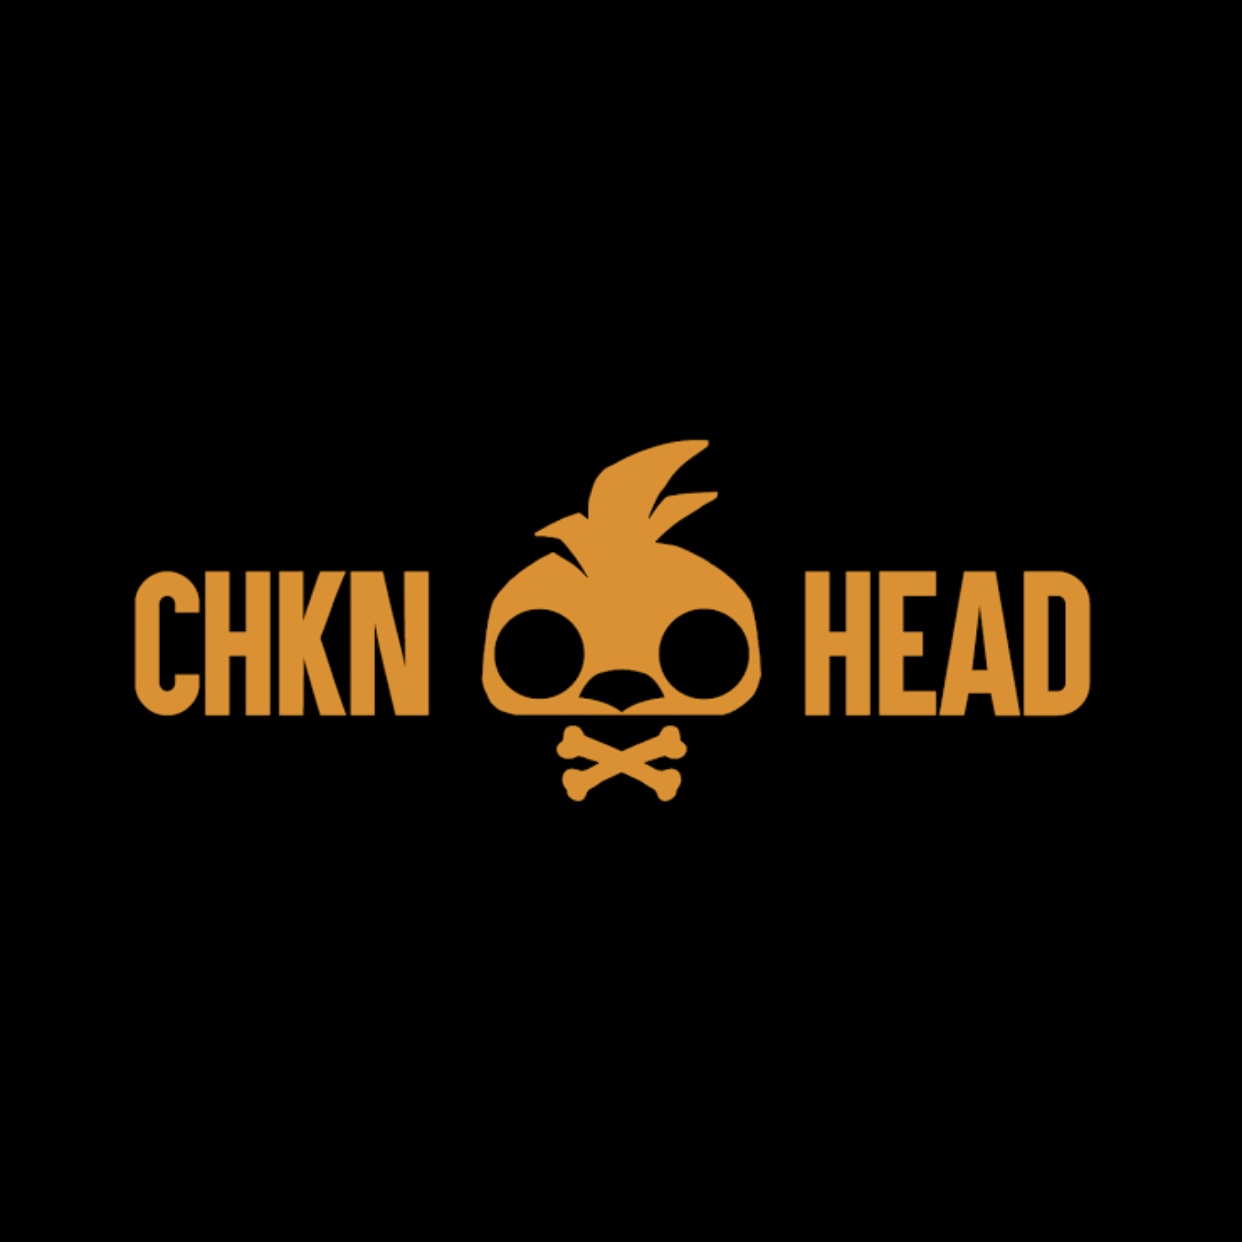 ChknHead